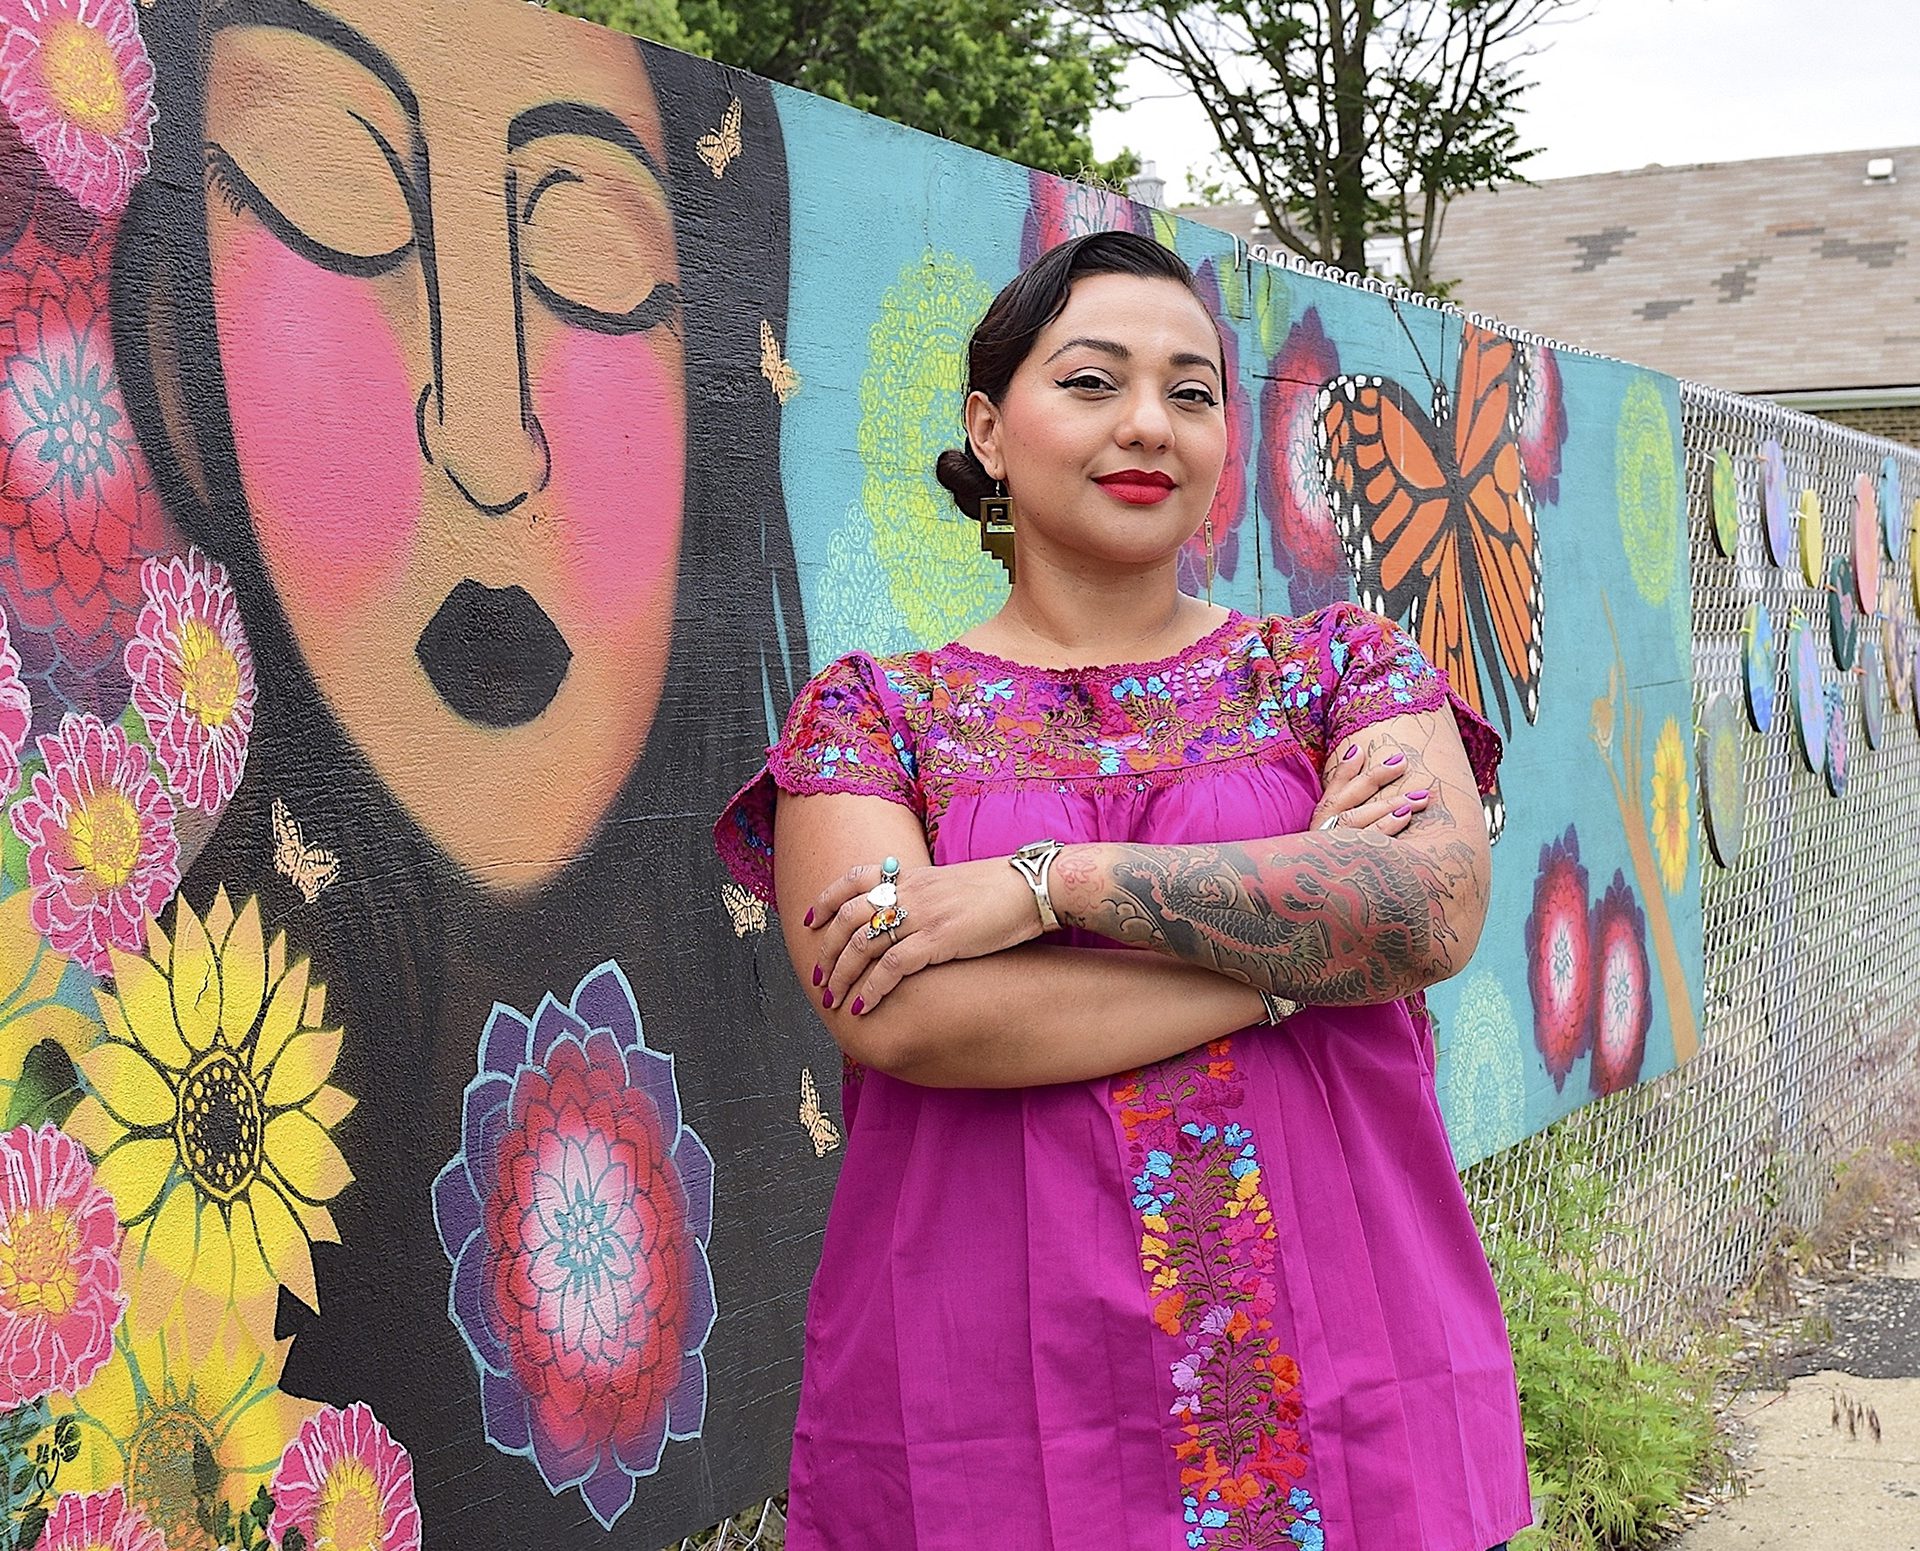 muralist Delilah Salgado with a pink dress